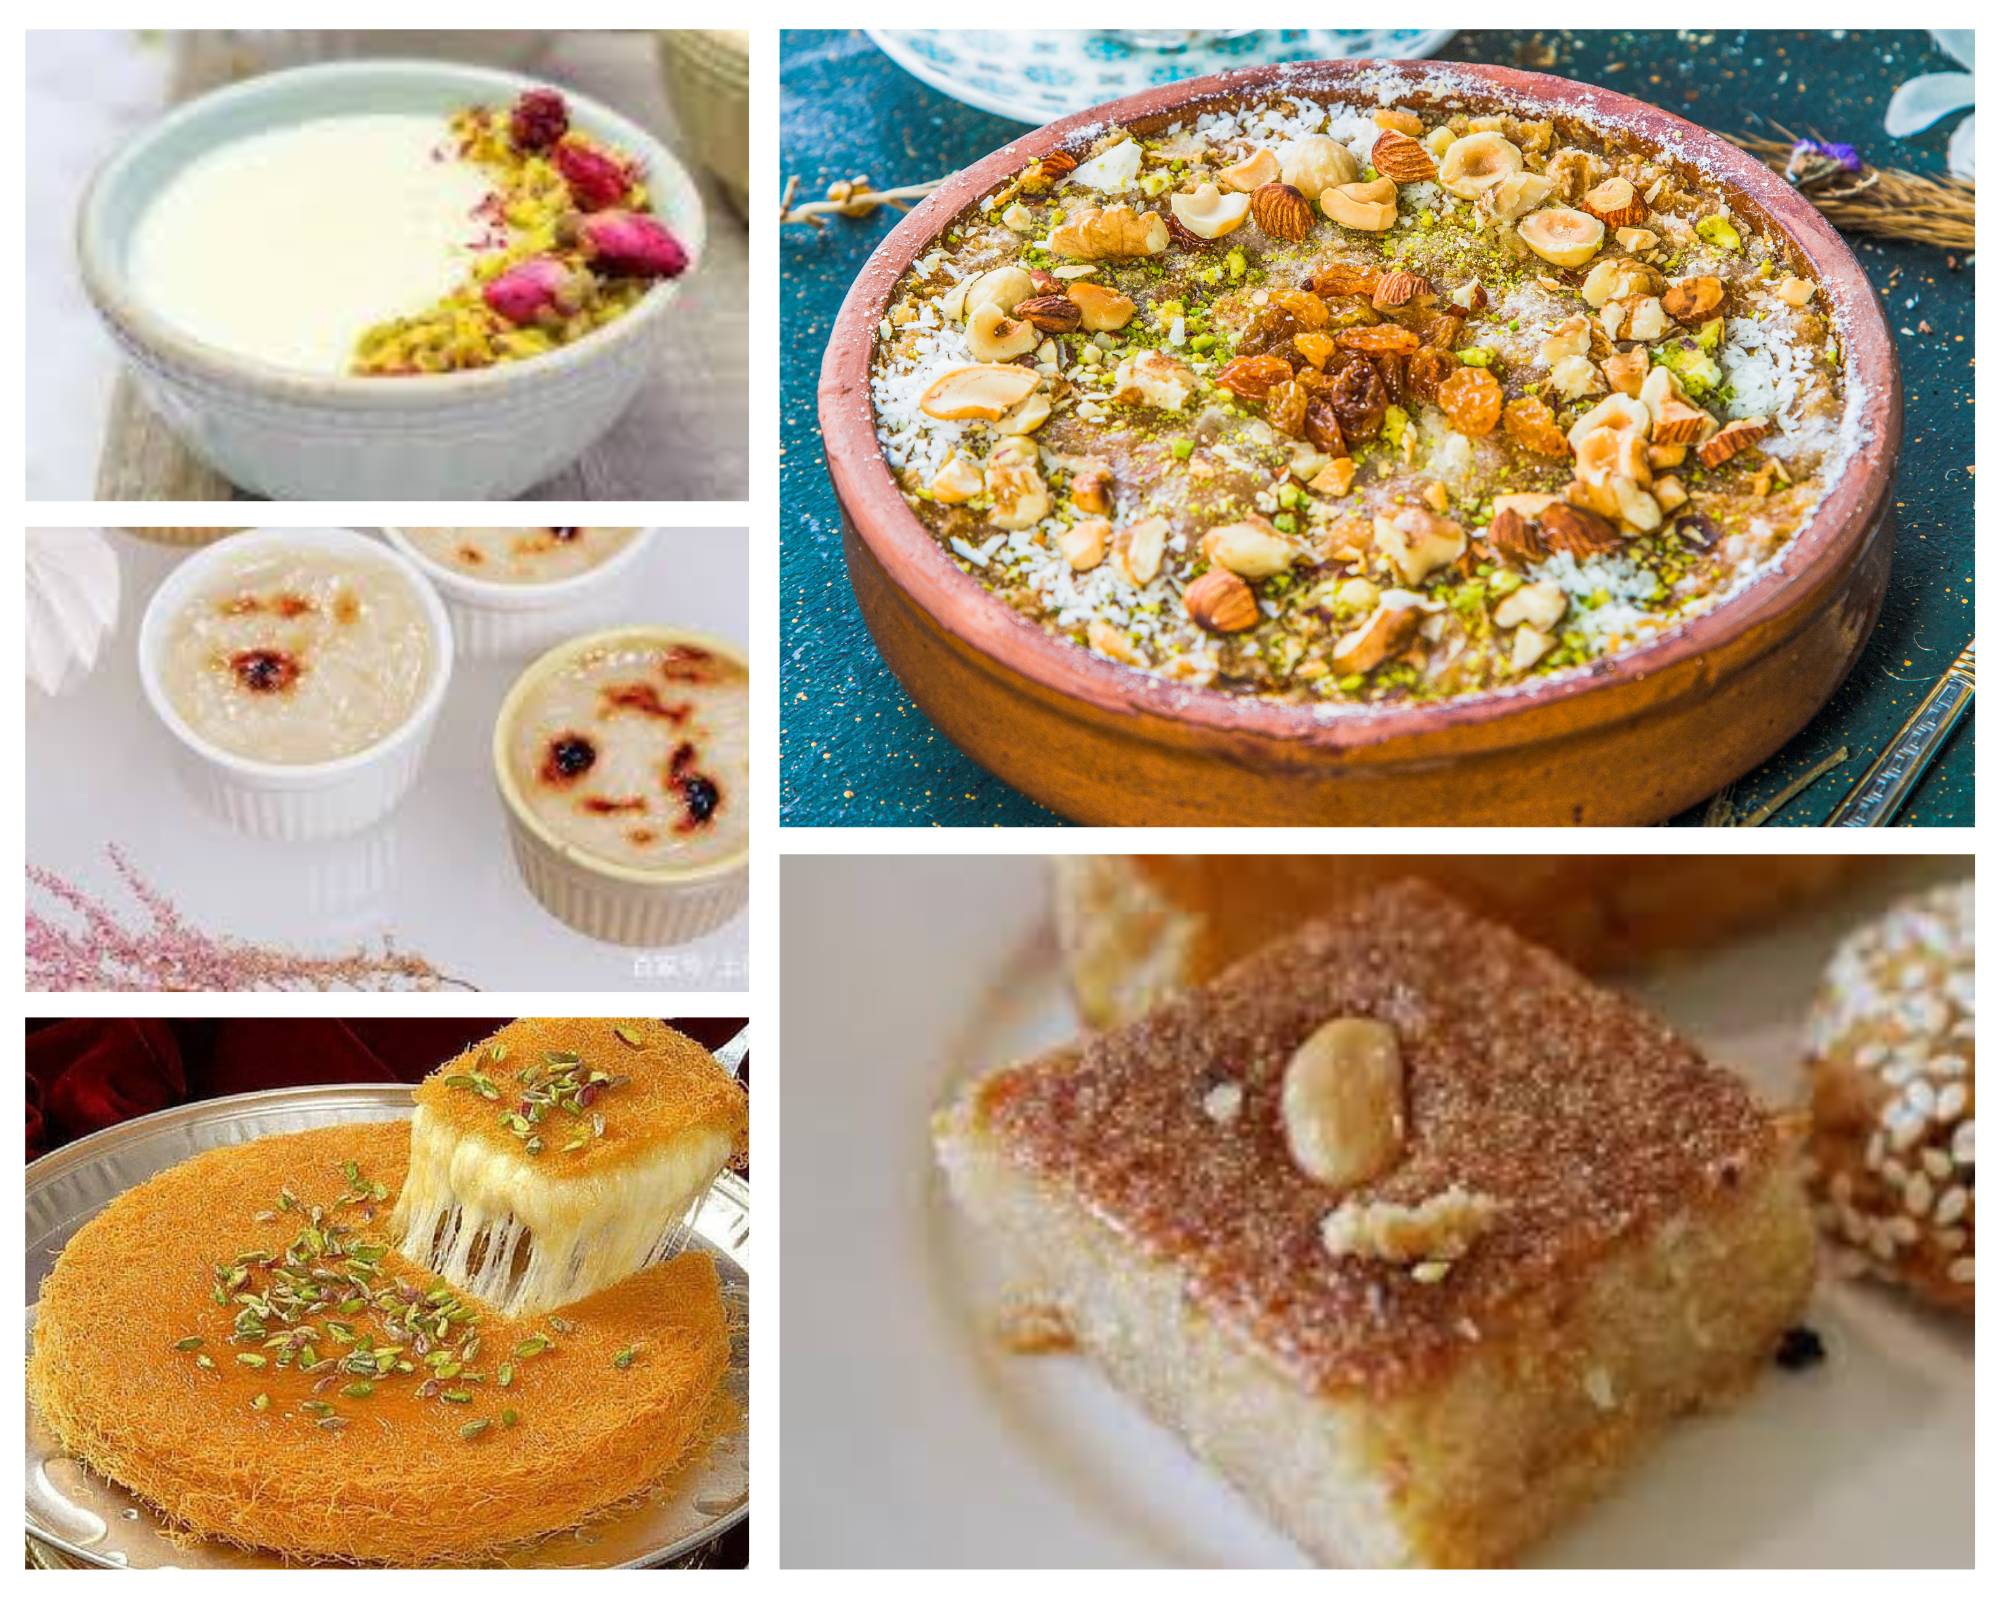 Mahalabiya Um Ali Roz bi laban Kanefeh Basbousa desserts Egypt